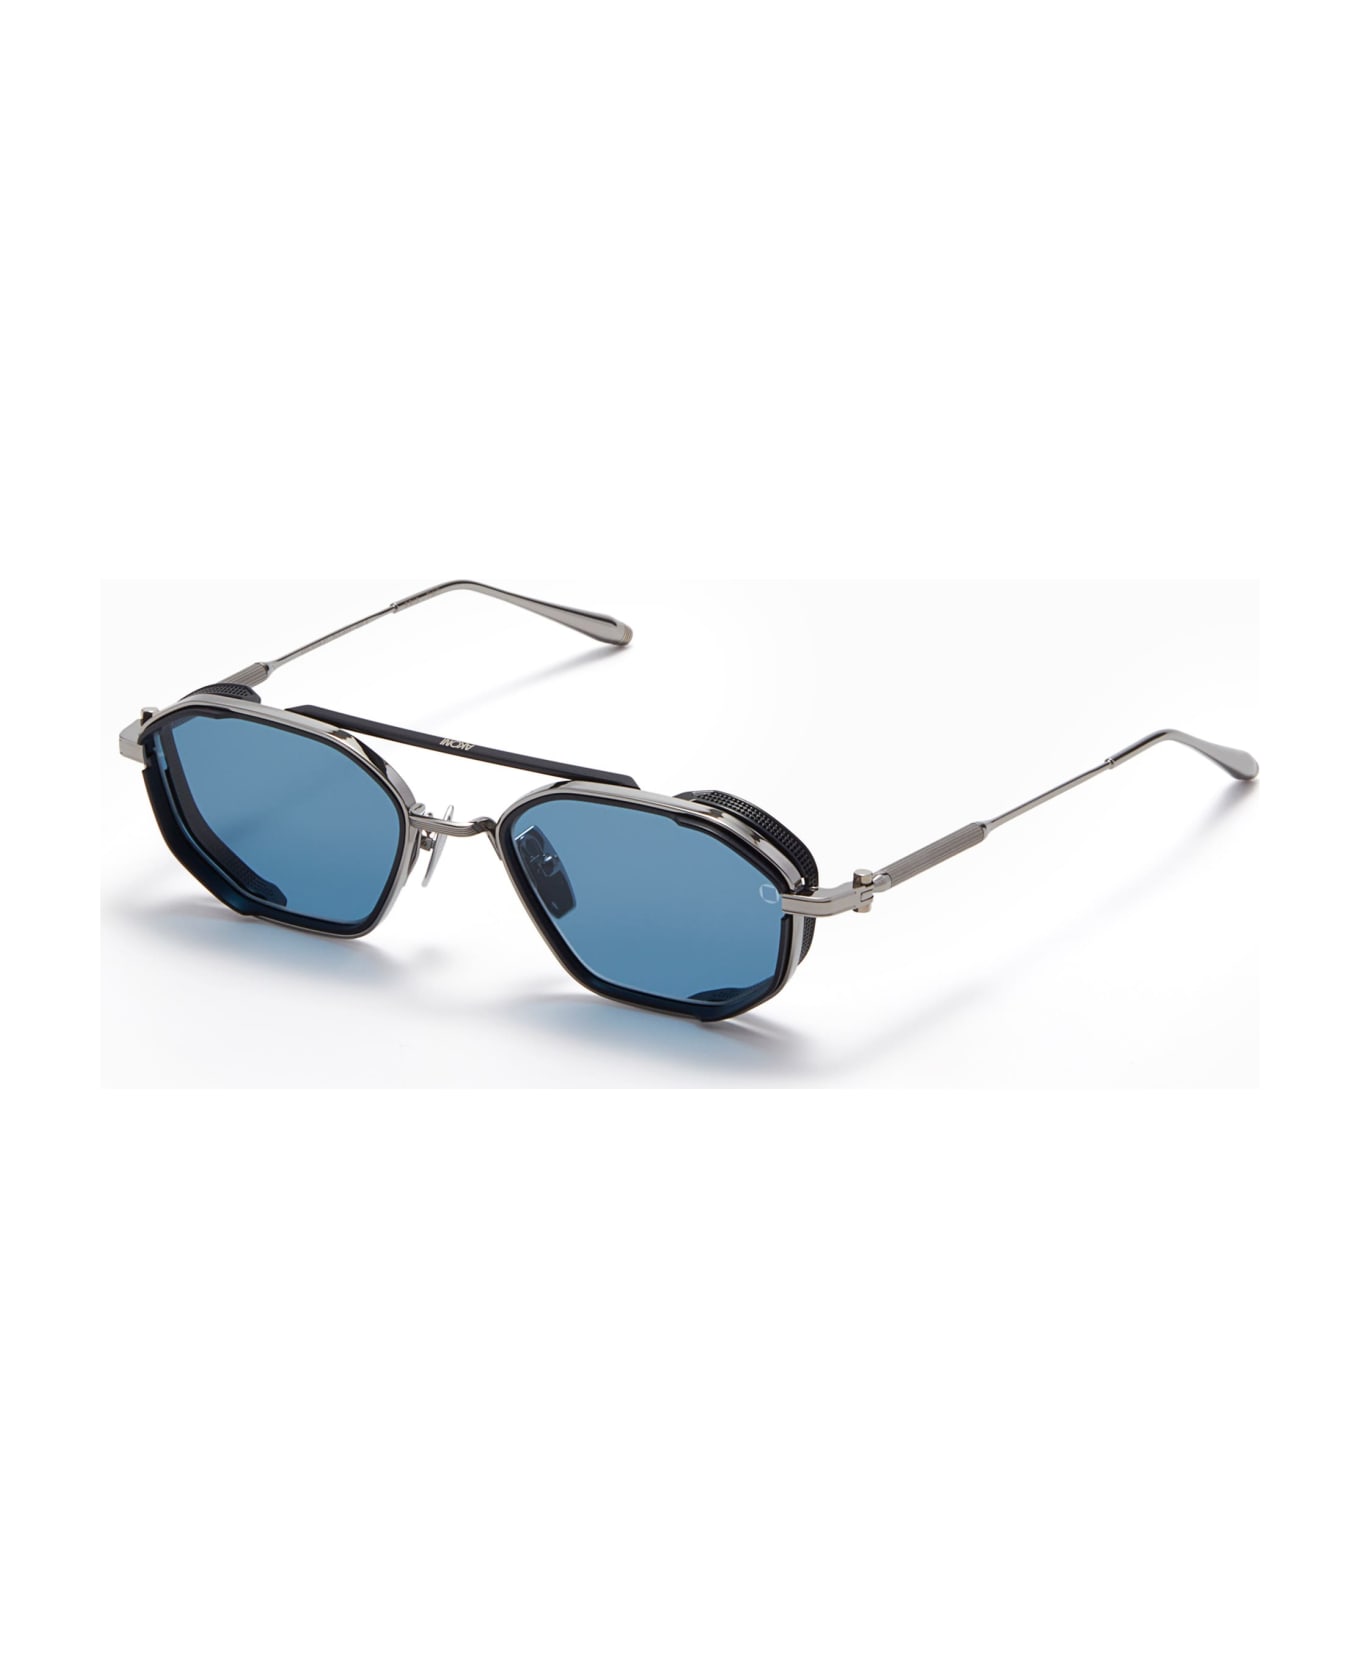 Akoni Eris-two - Palladium / Matte Navy Sunglasses - navy blue/palladium